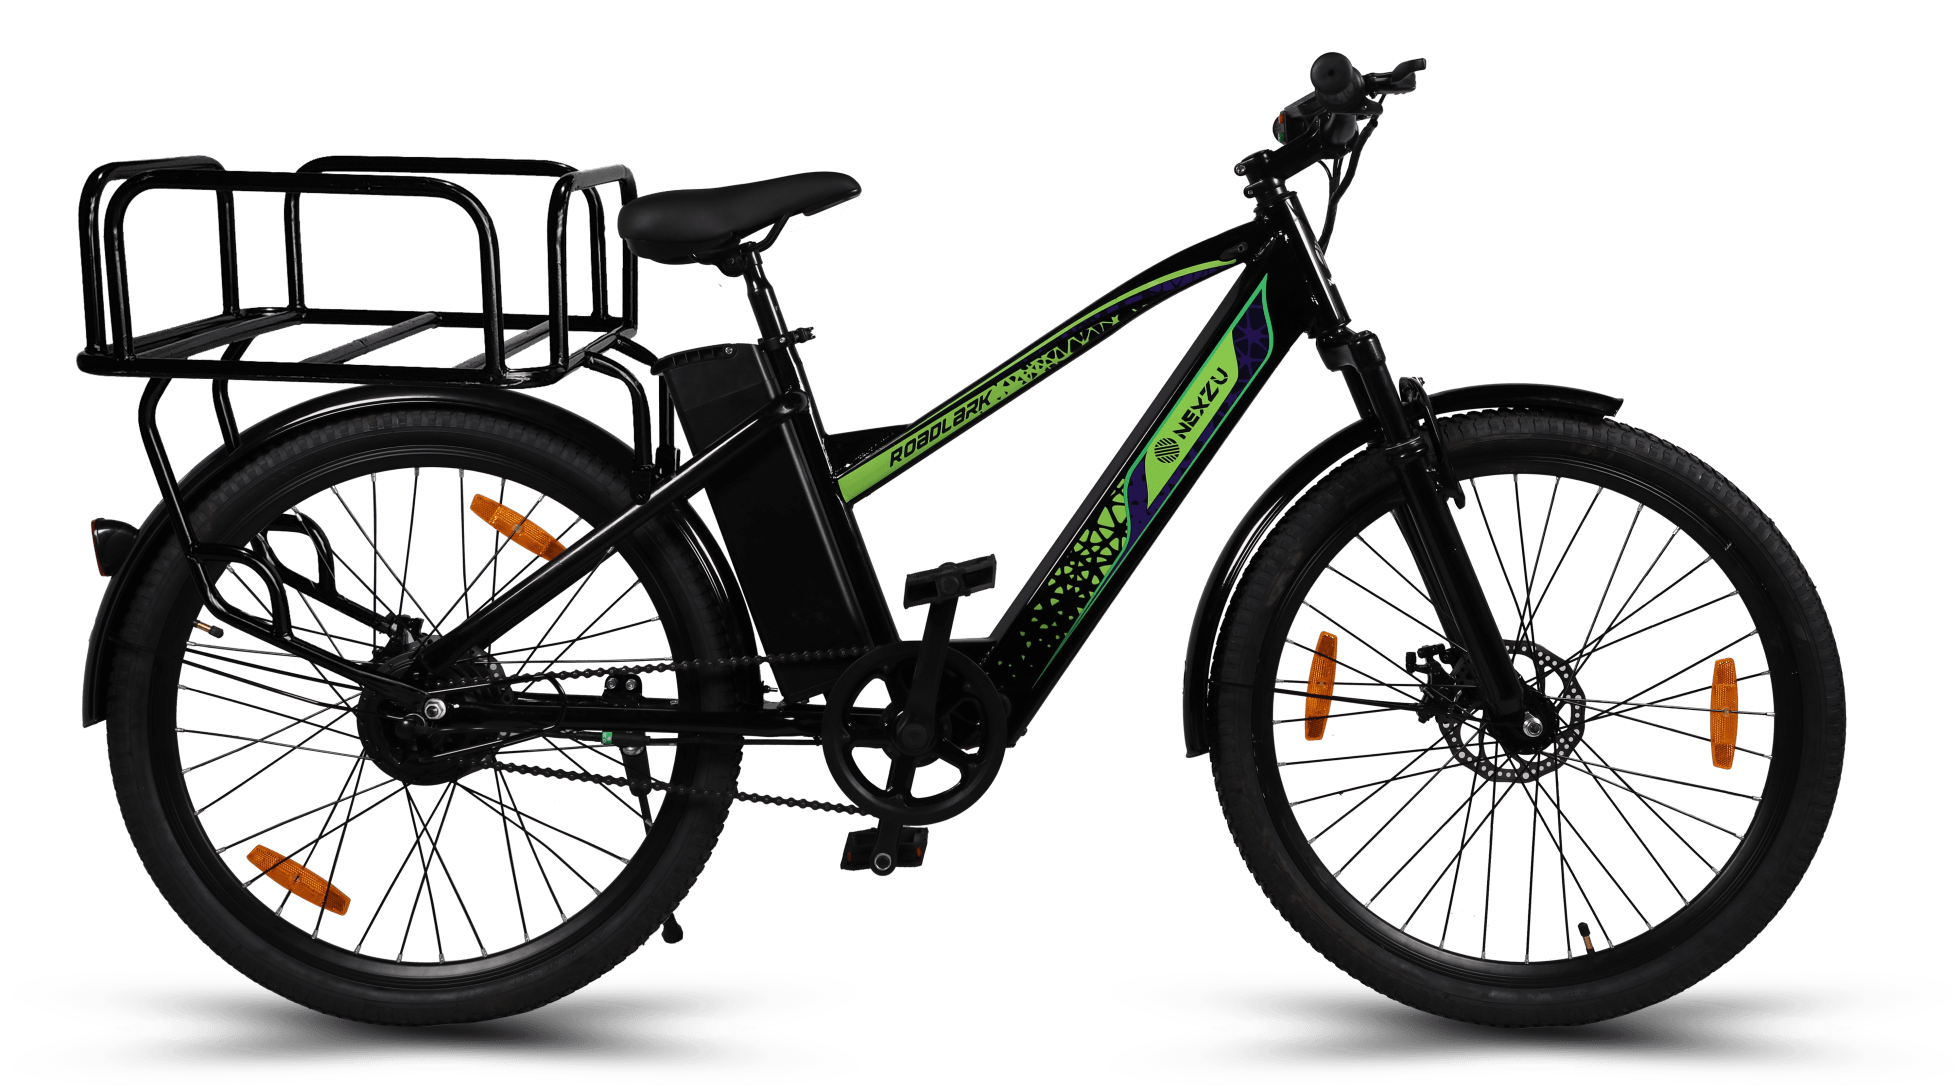 Nexzu Roadlark cargo e-bicycle launched: Top speed, load capacity, price